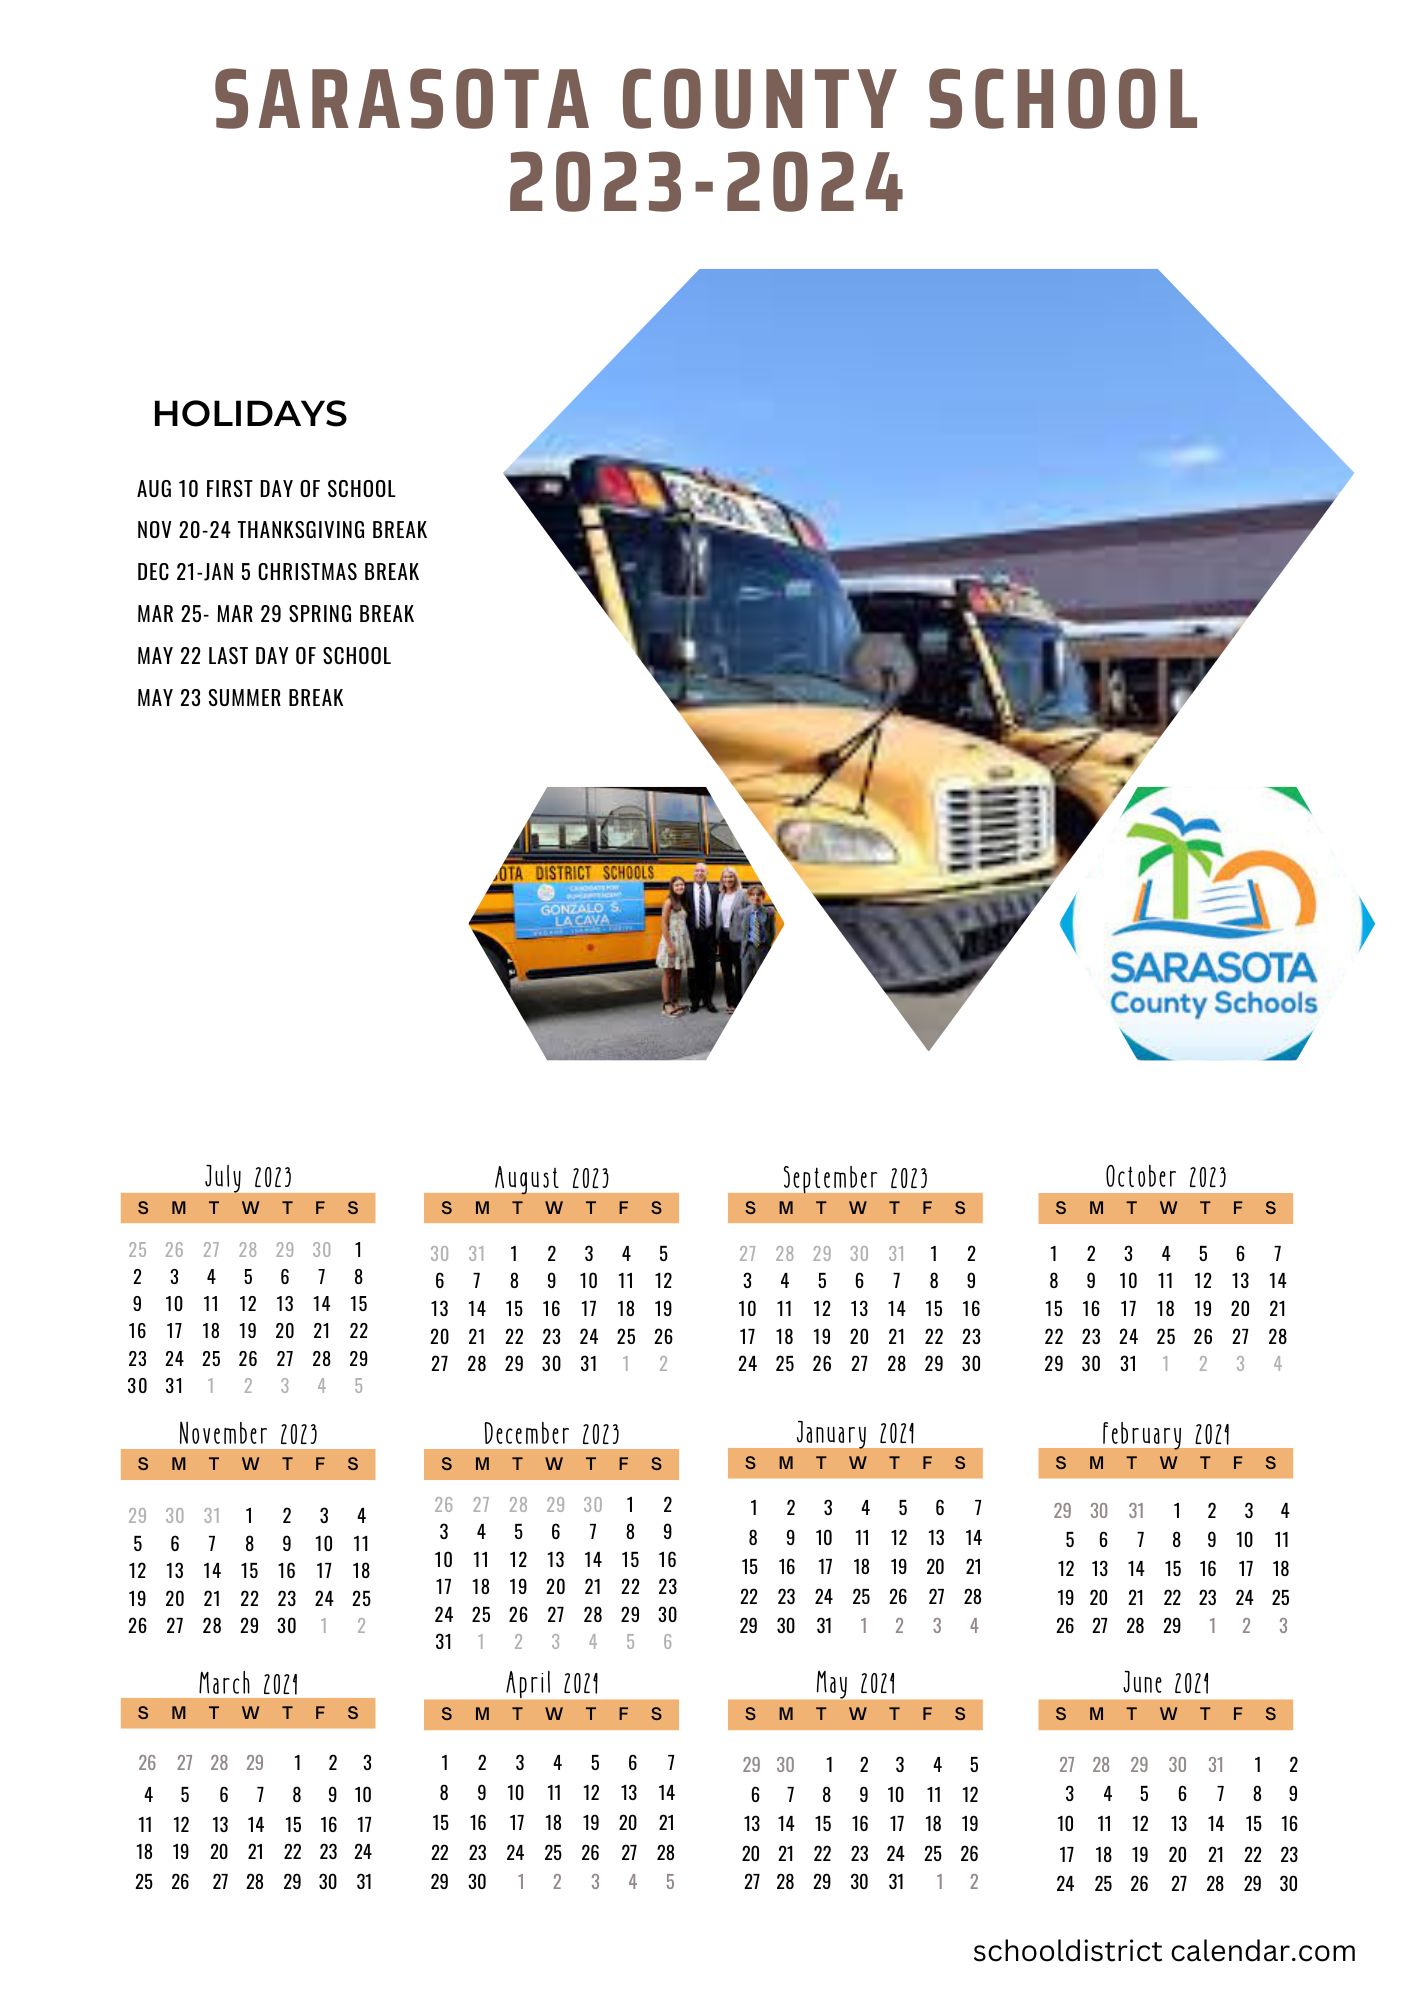 sarasota-county-schools-calendar-holidays-2023-2024